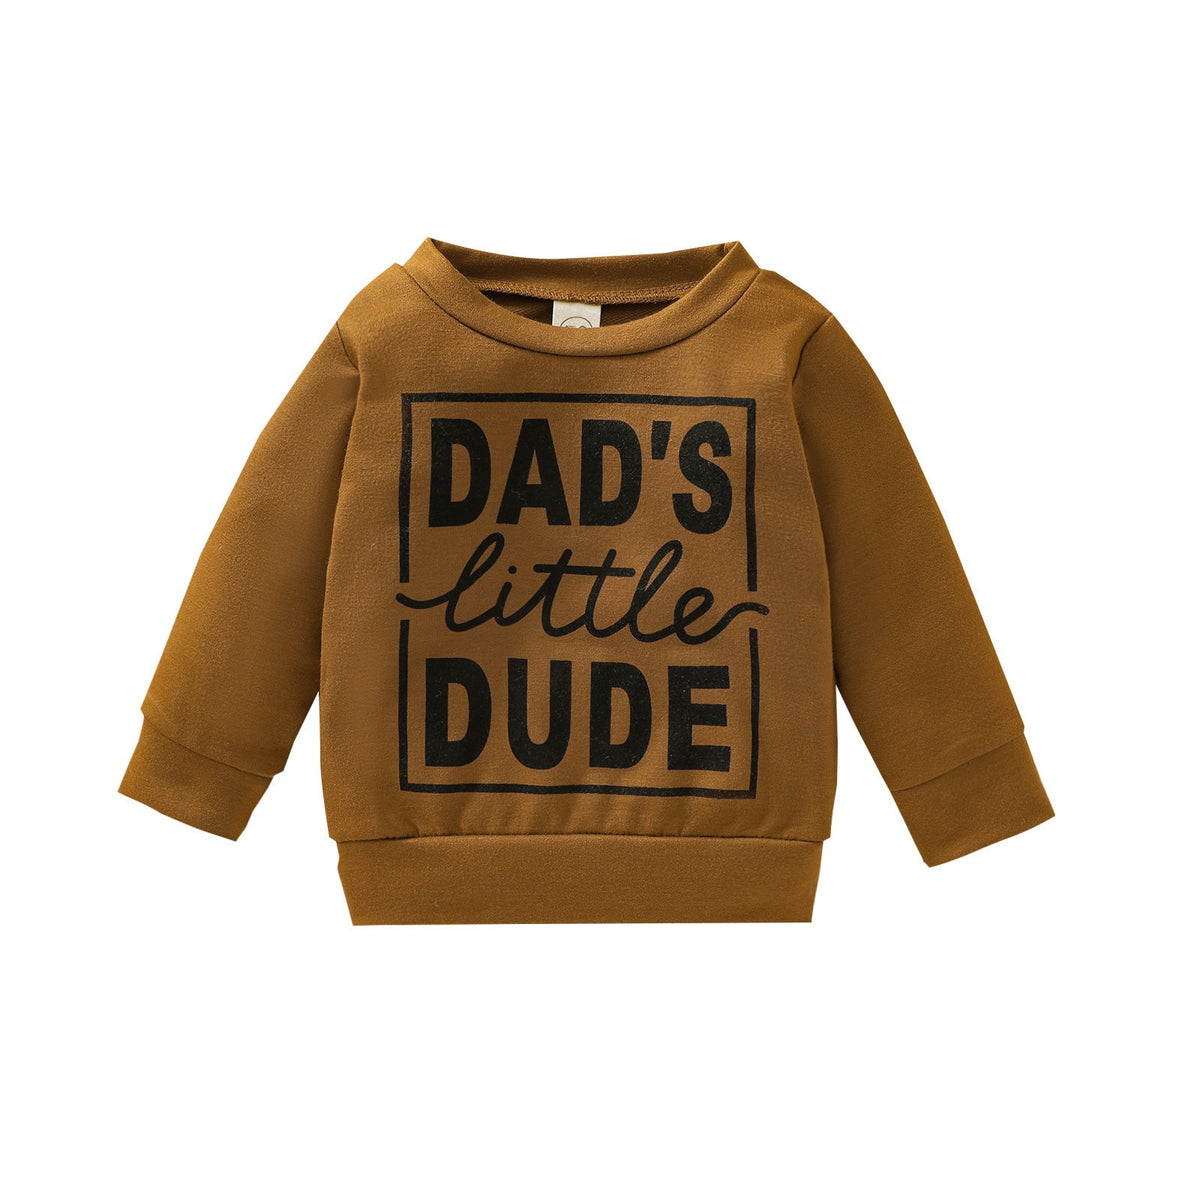 Dad's Little Dude Long-Sleeved Sweatshirt